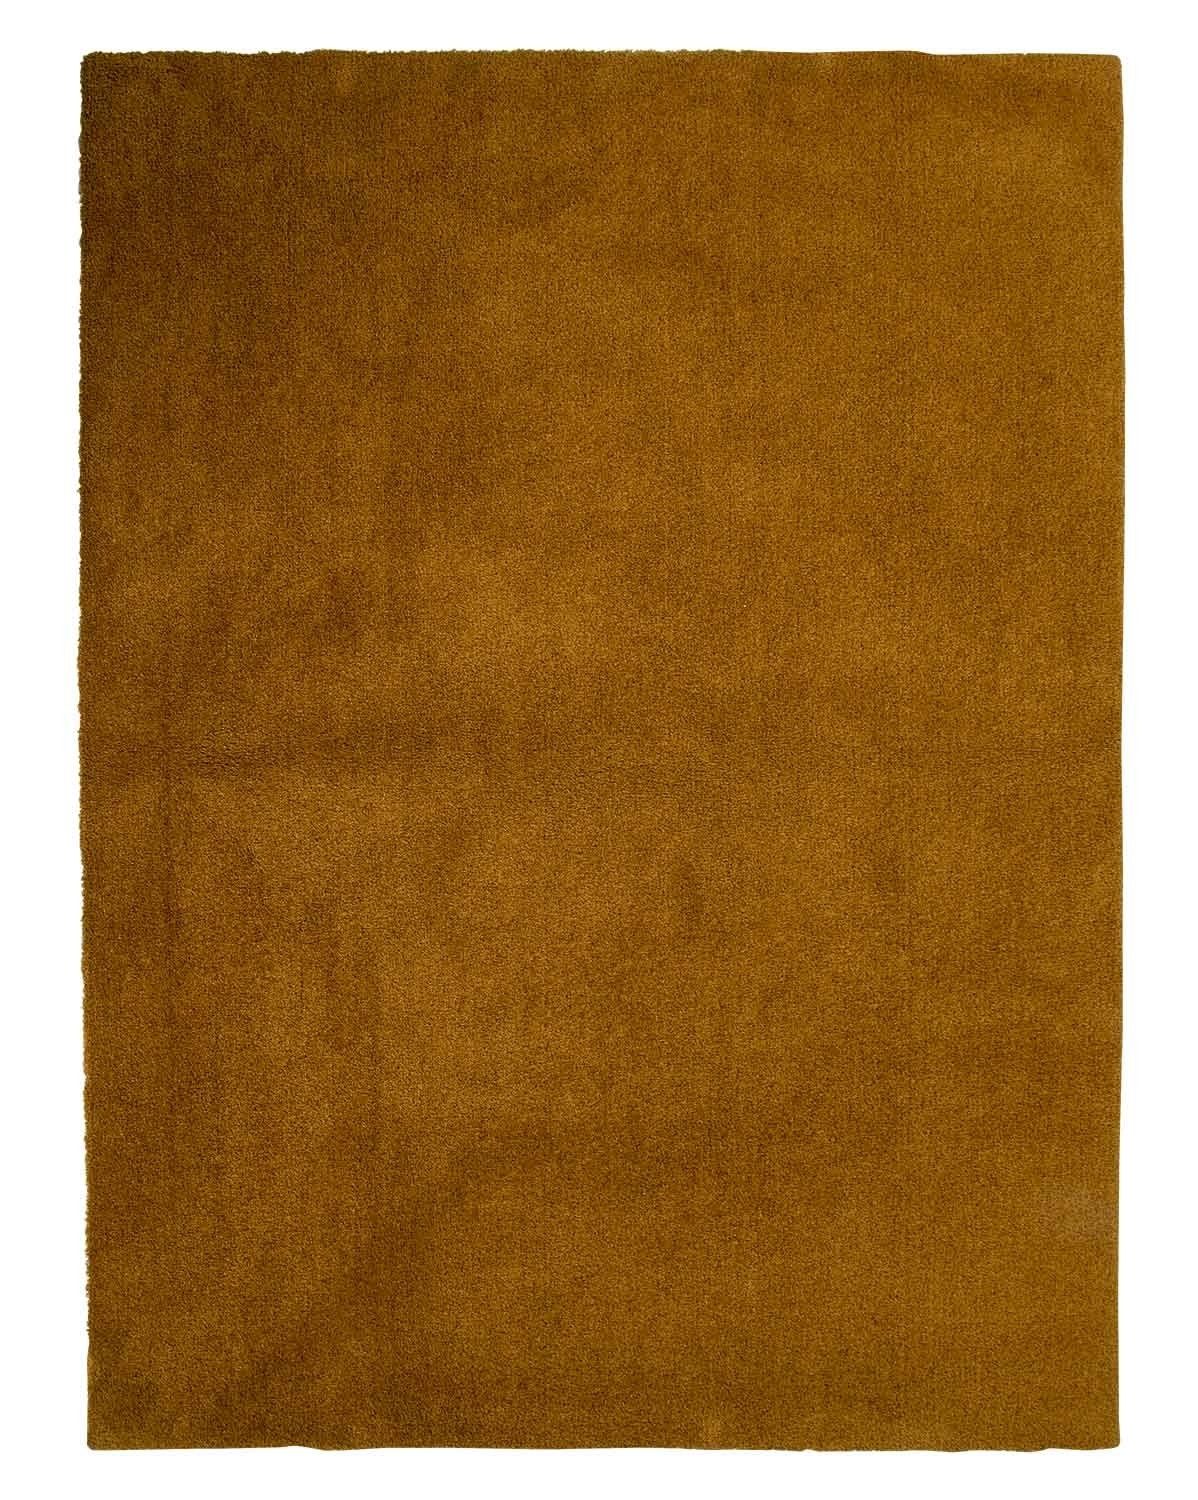 Teppich FEEL COSY, Polyester, Senffarben, 60 x 115 cm, Balta Rugs, rechteckig, Höhe: 11 mm | Kurzflor-Teppiche